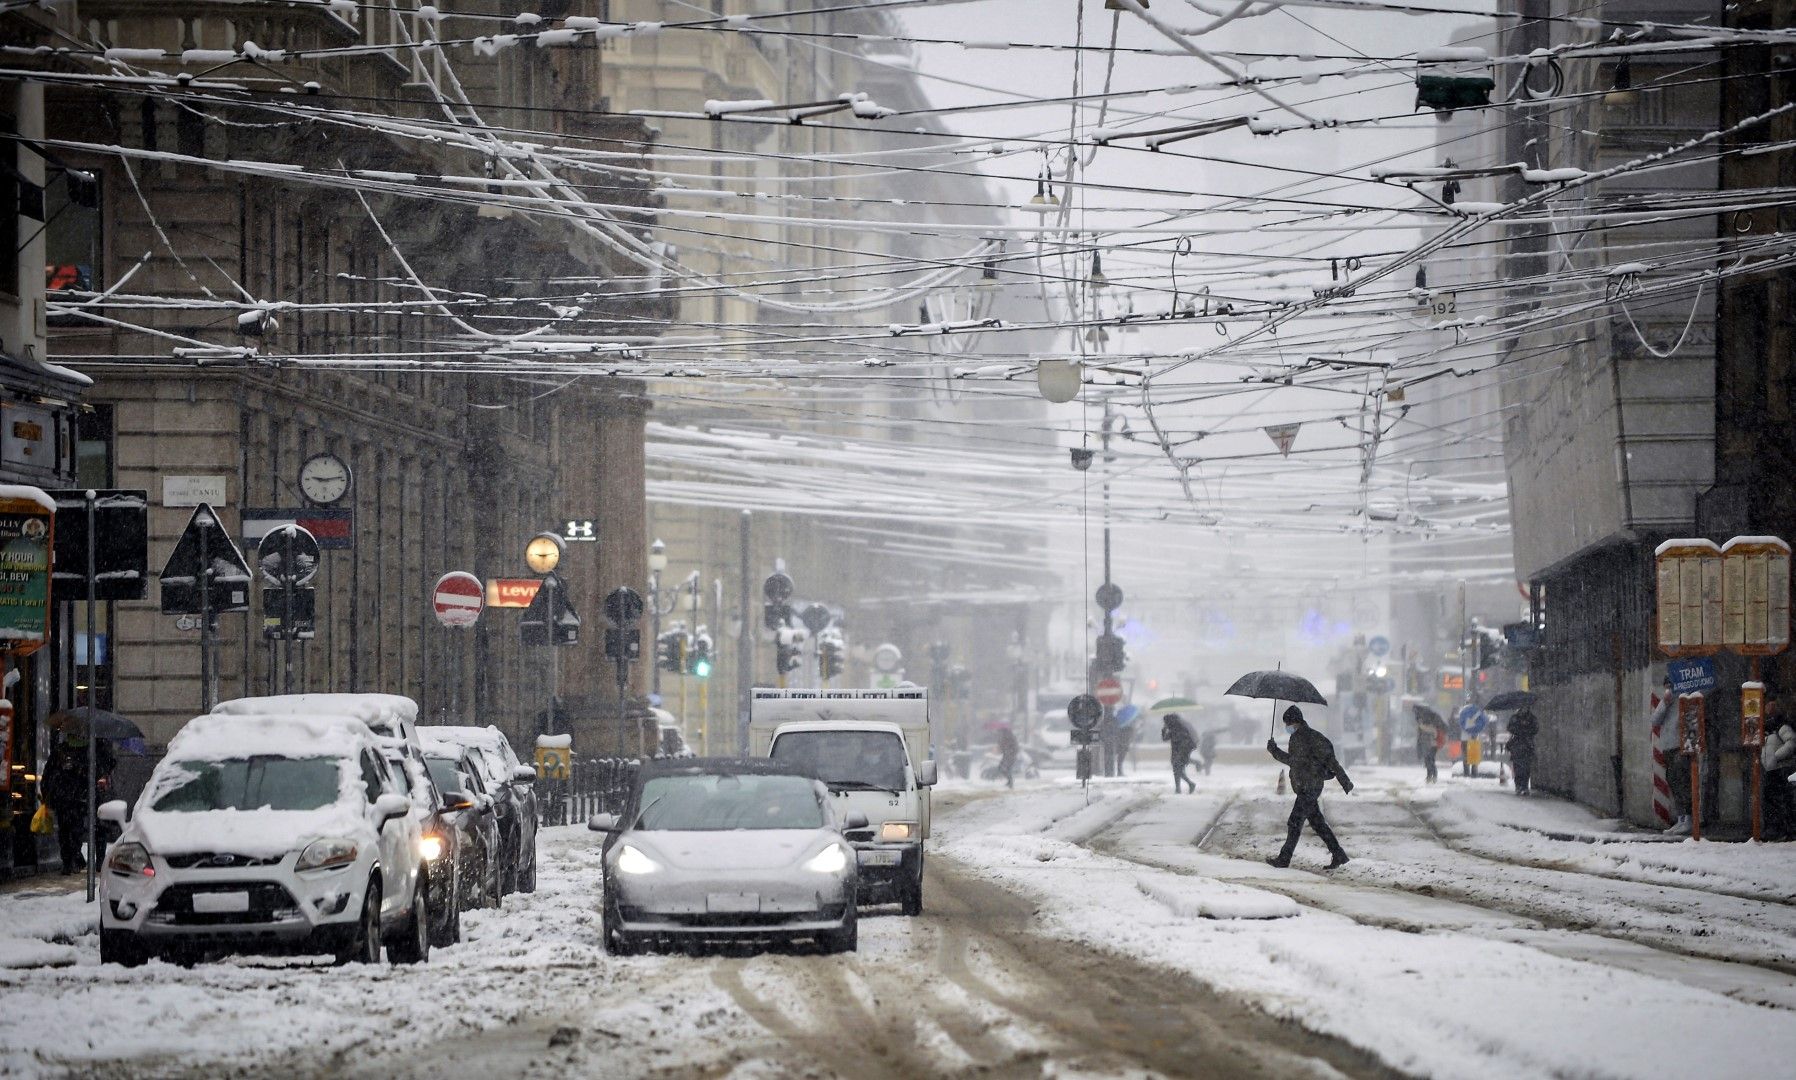 Милано побеля след силен снеговалеж в понеделник, 28 декември